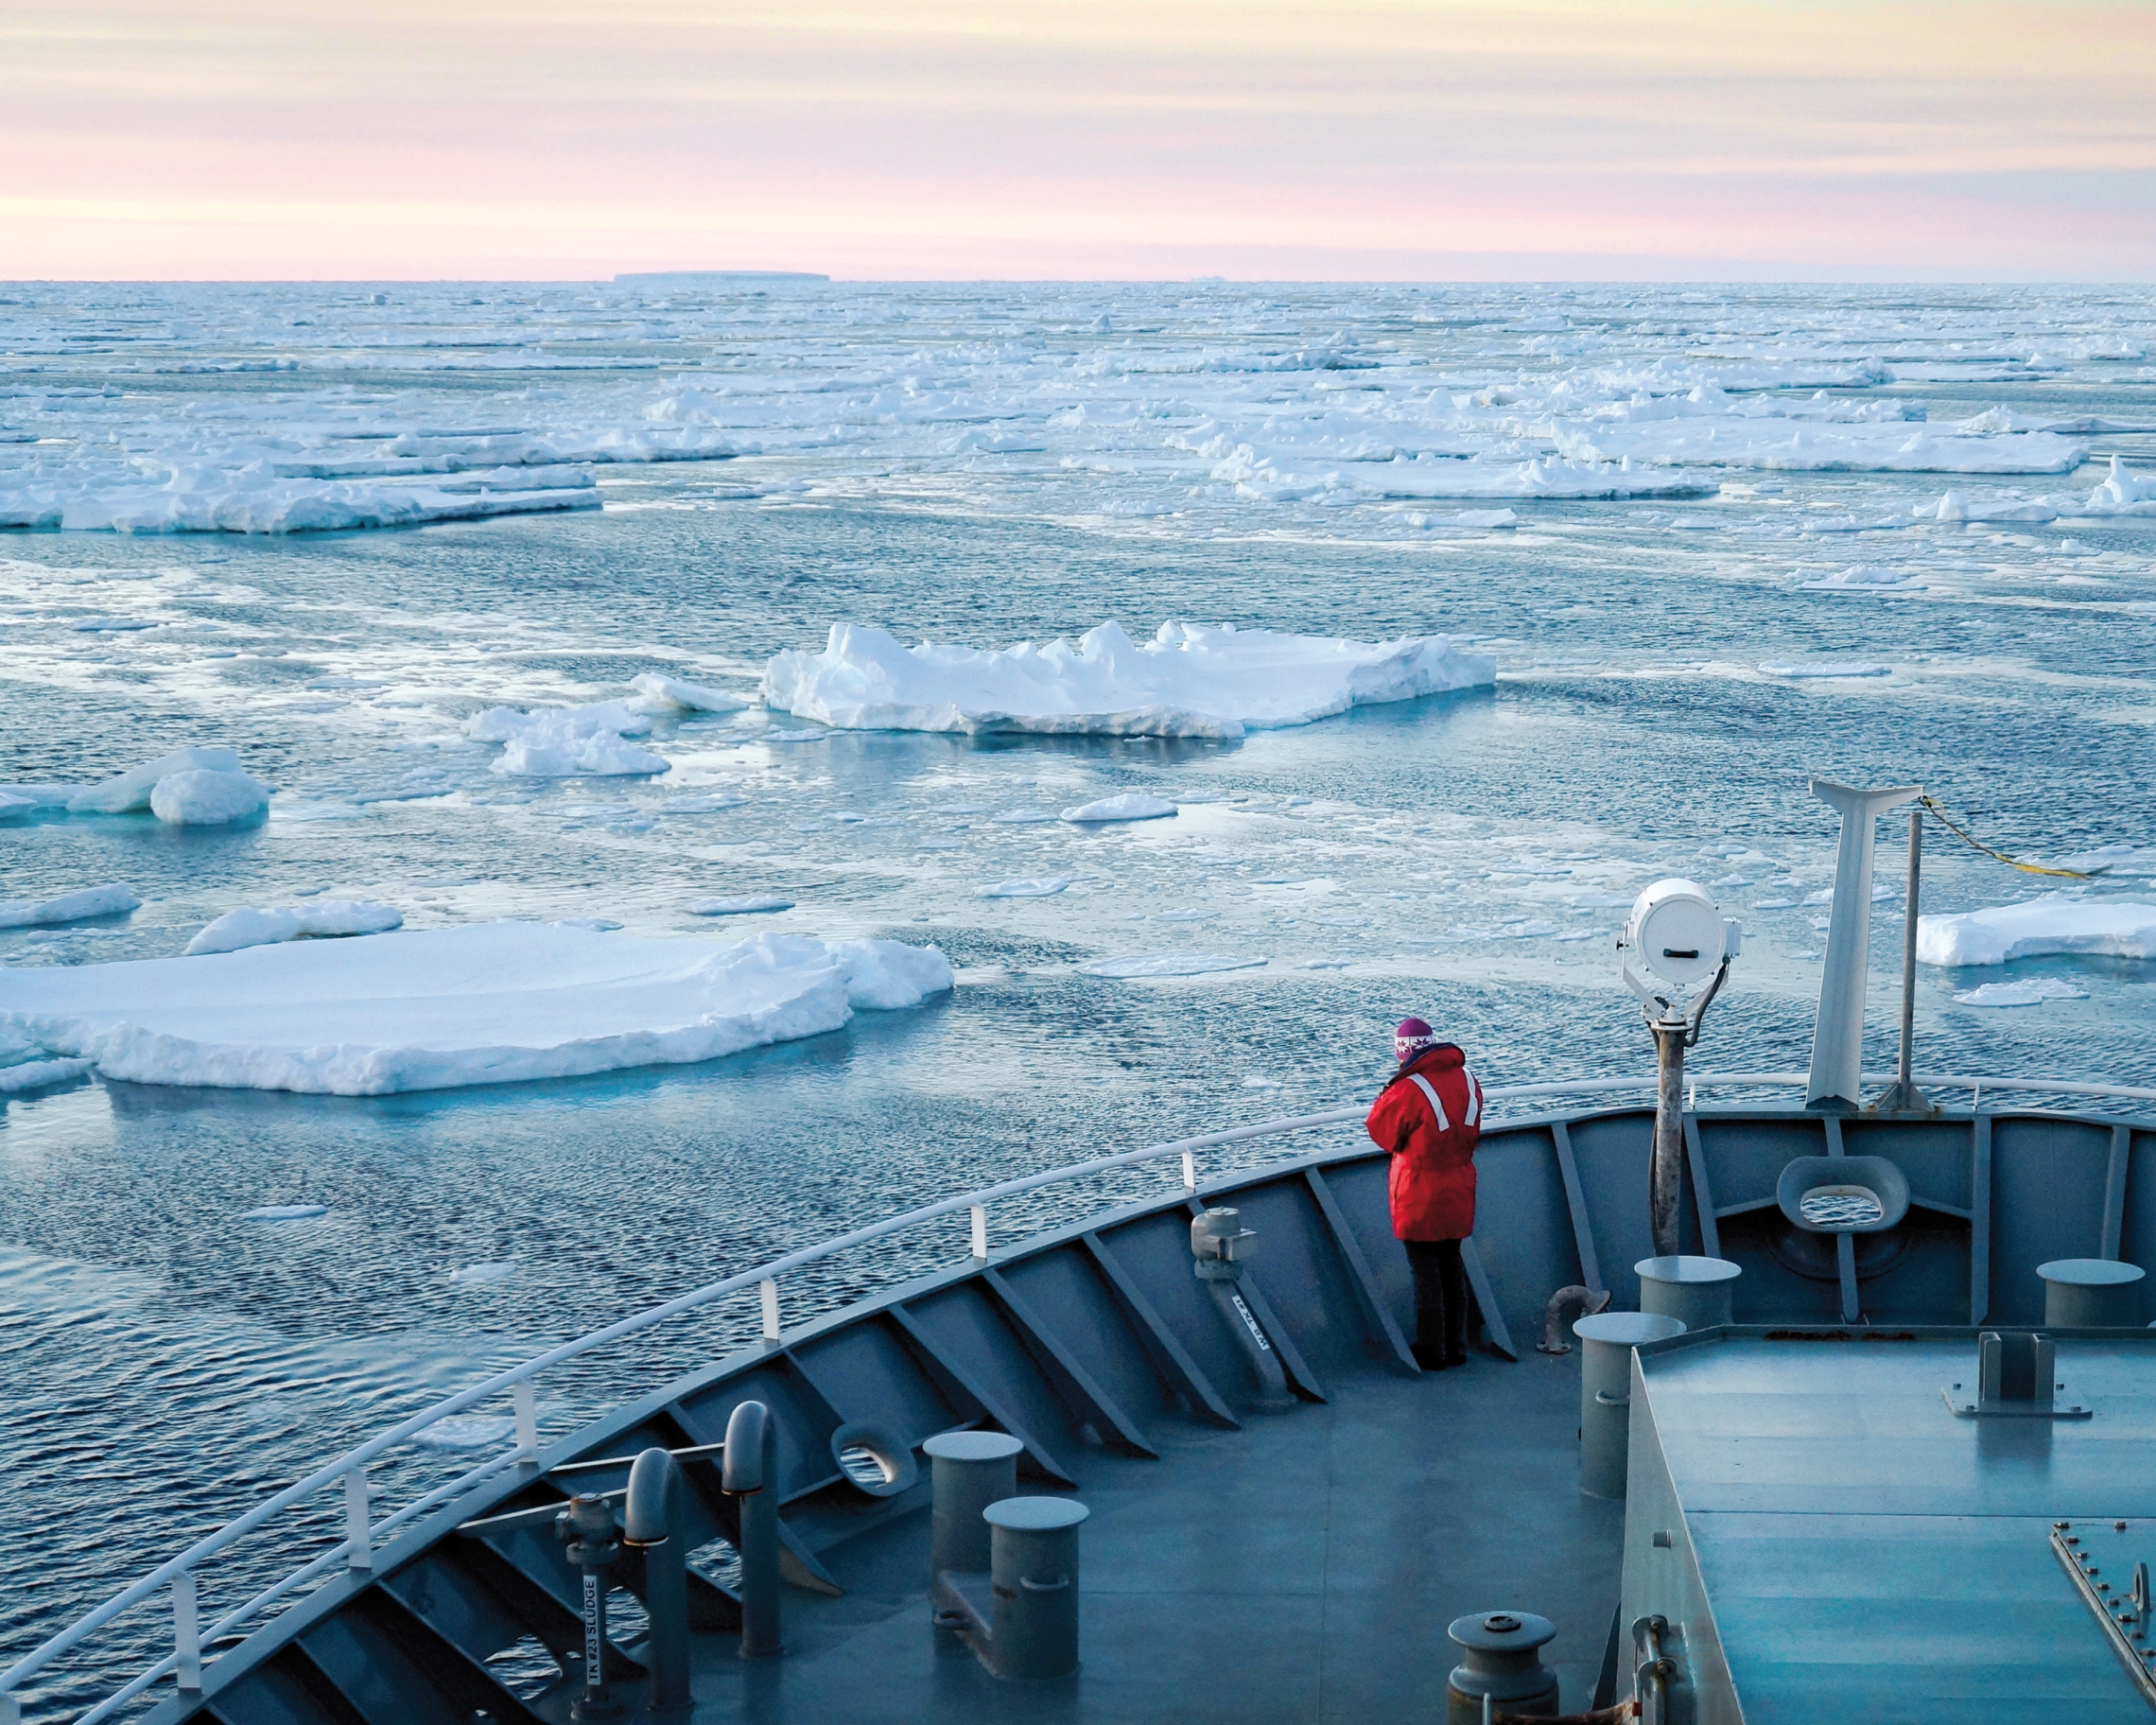 2019 - Ross Sea, Antarctica